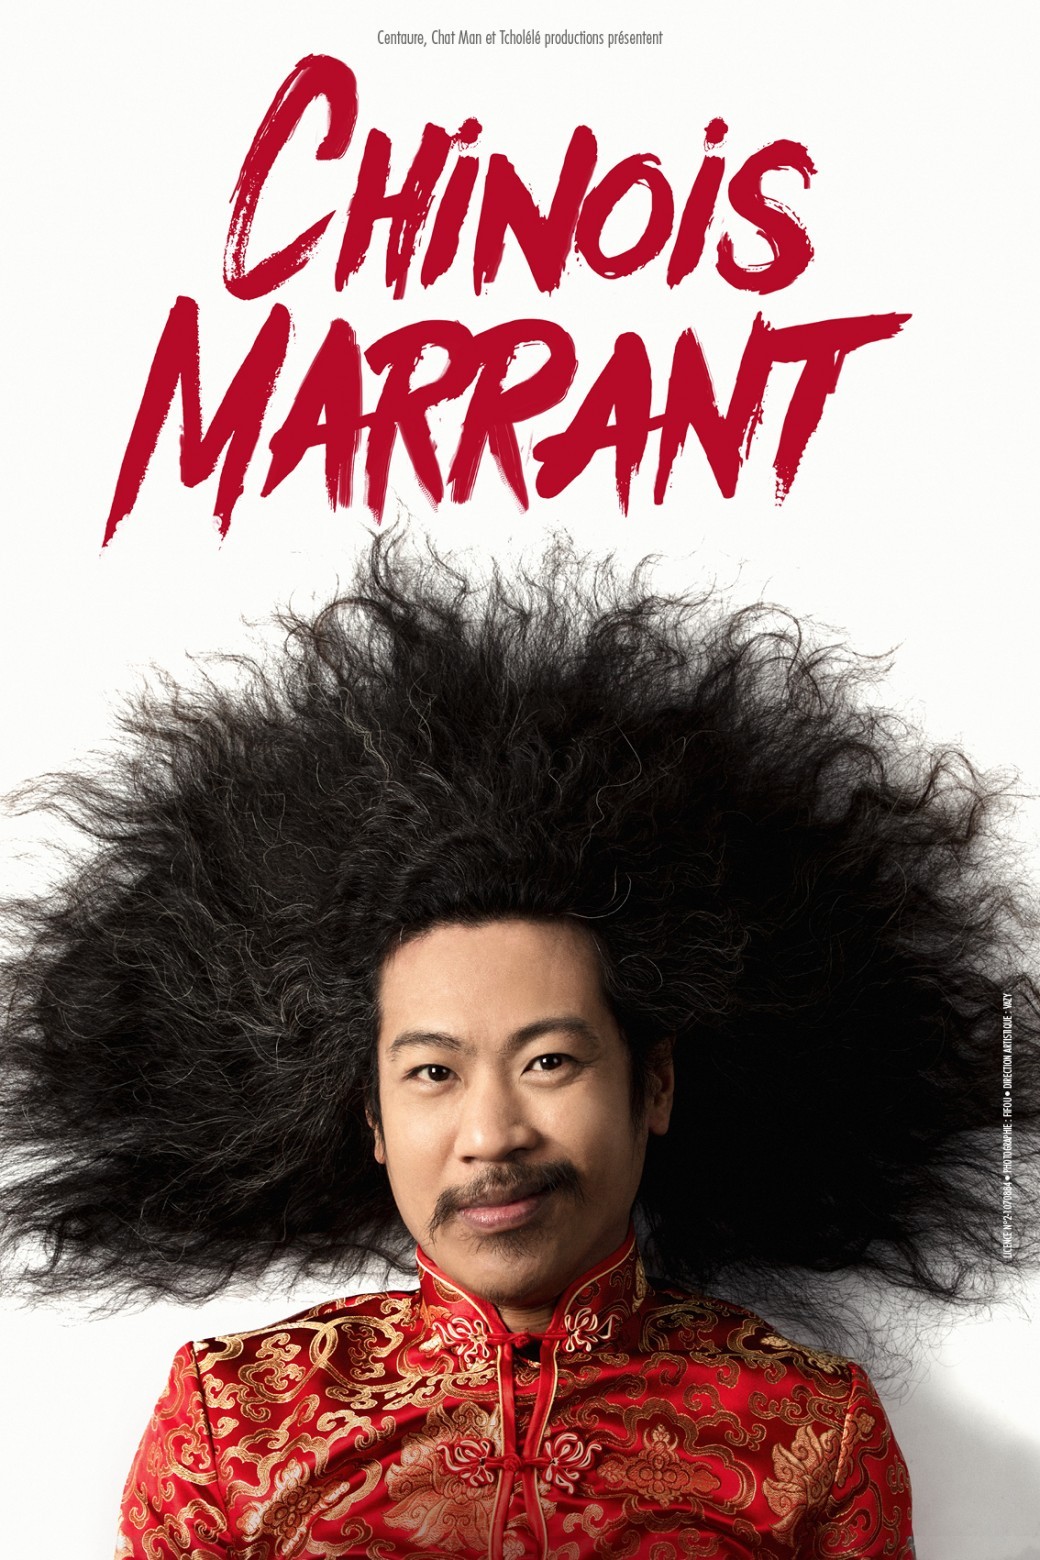 Bun Hay Mean dans "Chinois Marrant"